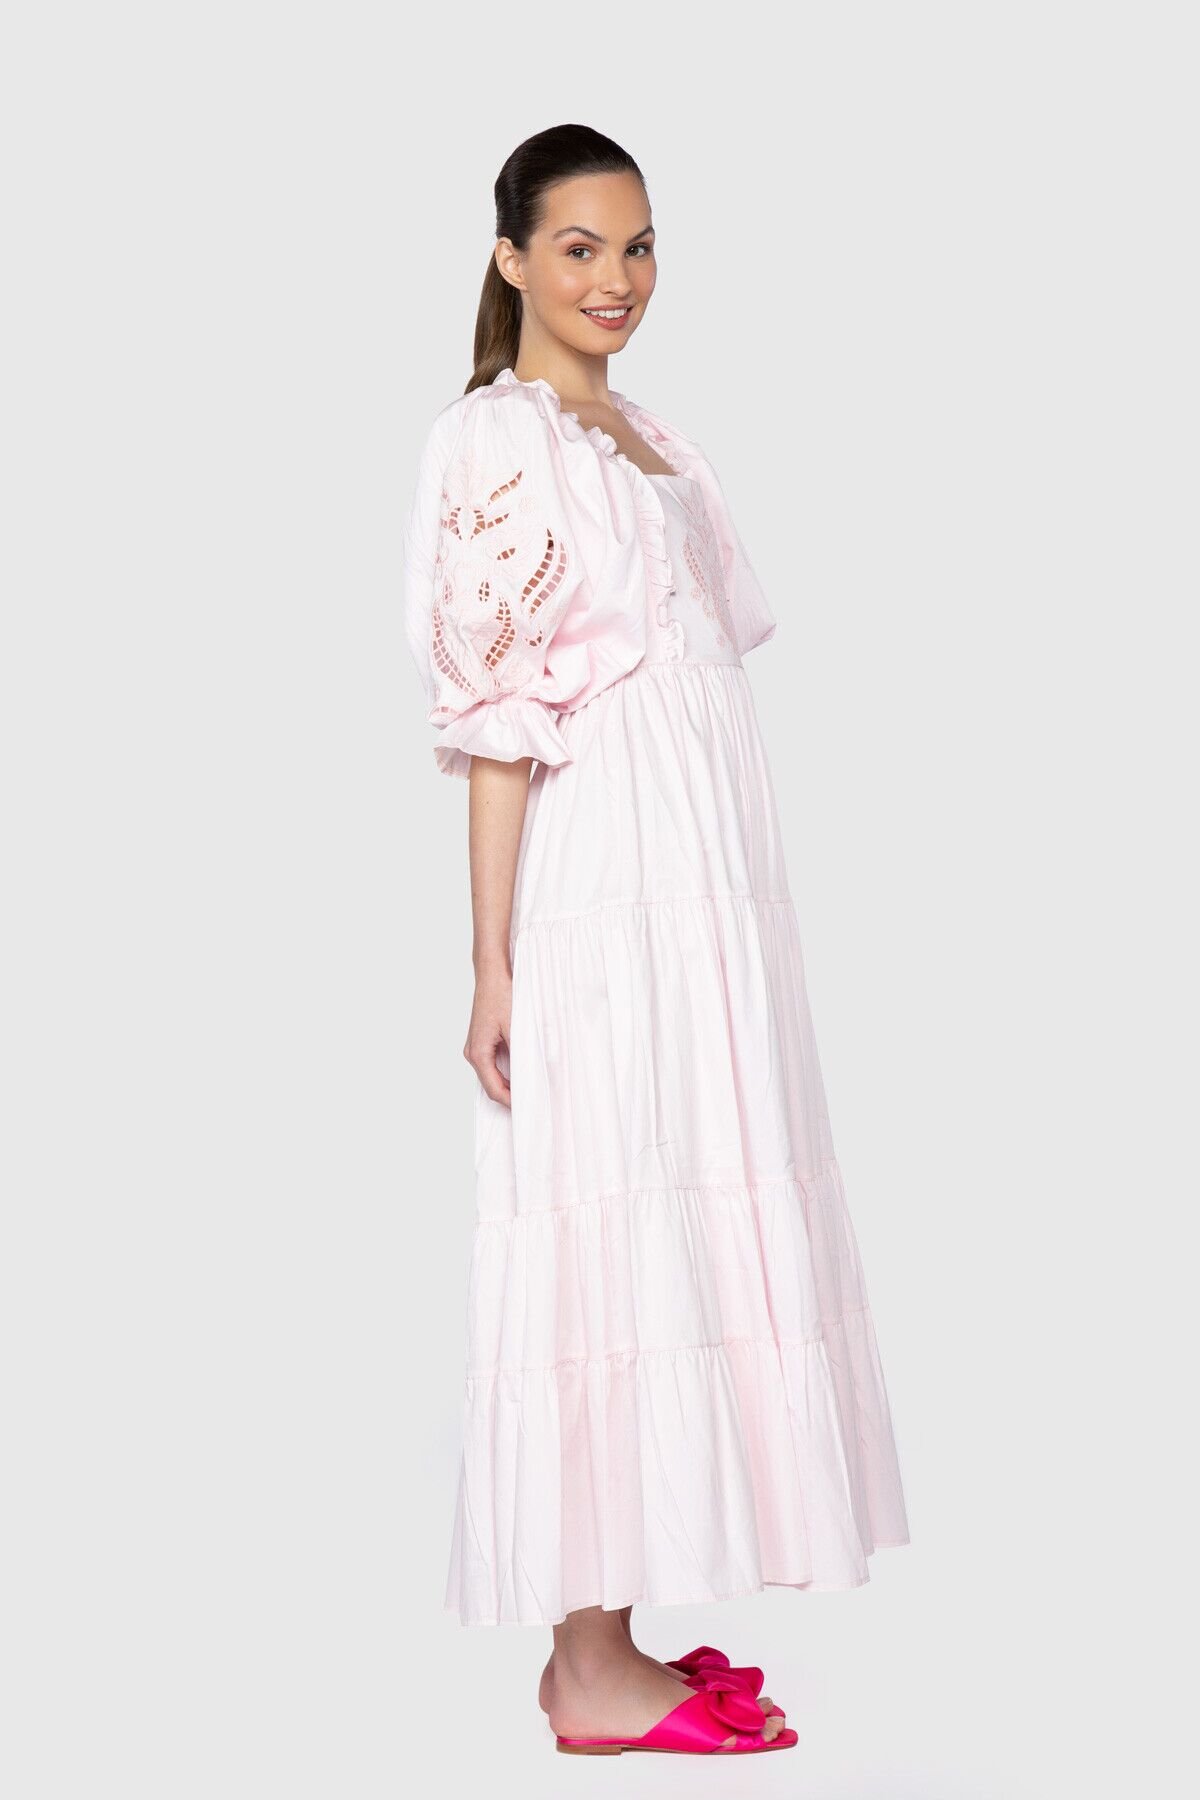 Voluminous Sleeve Ankle-Length Pink Dress